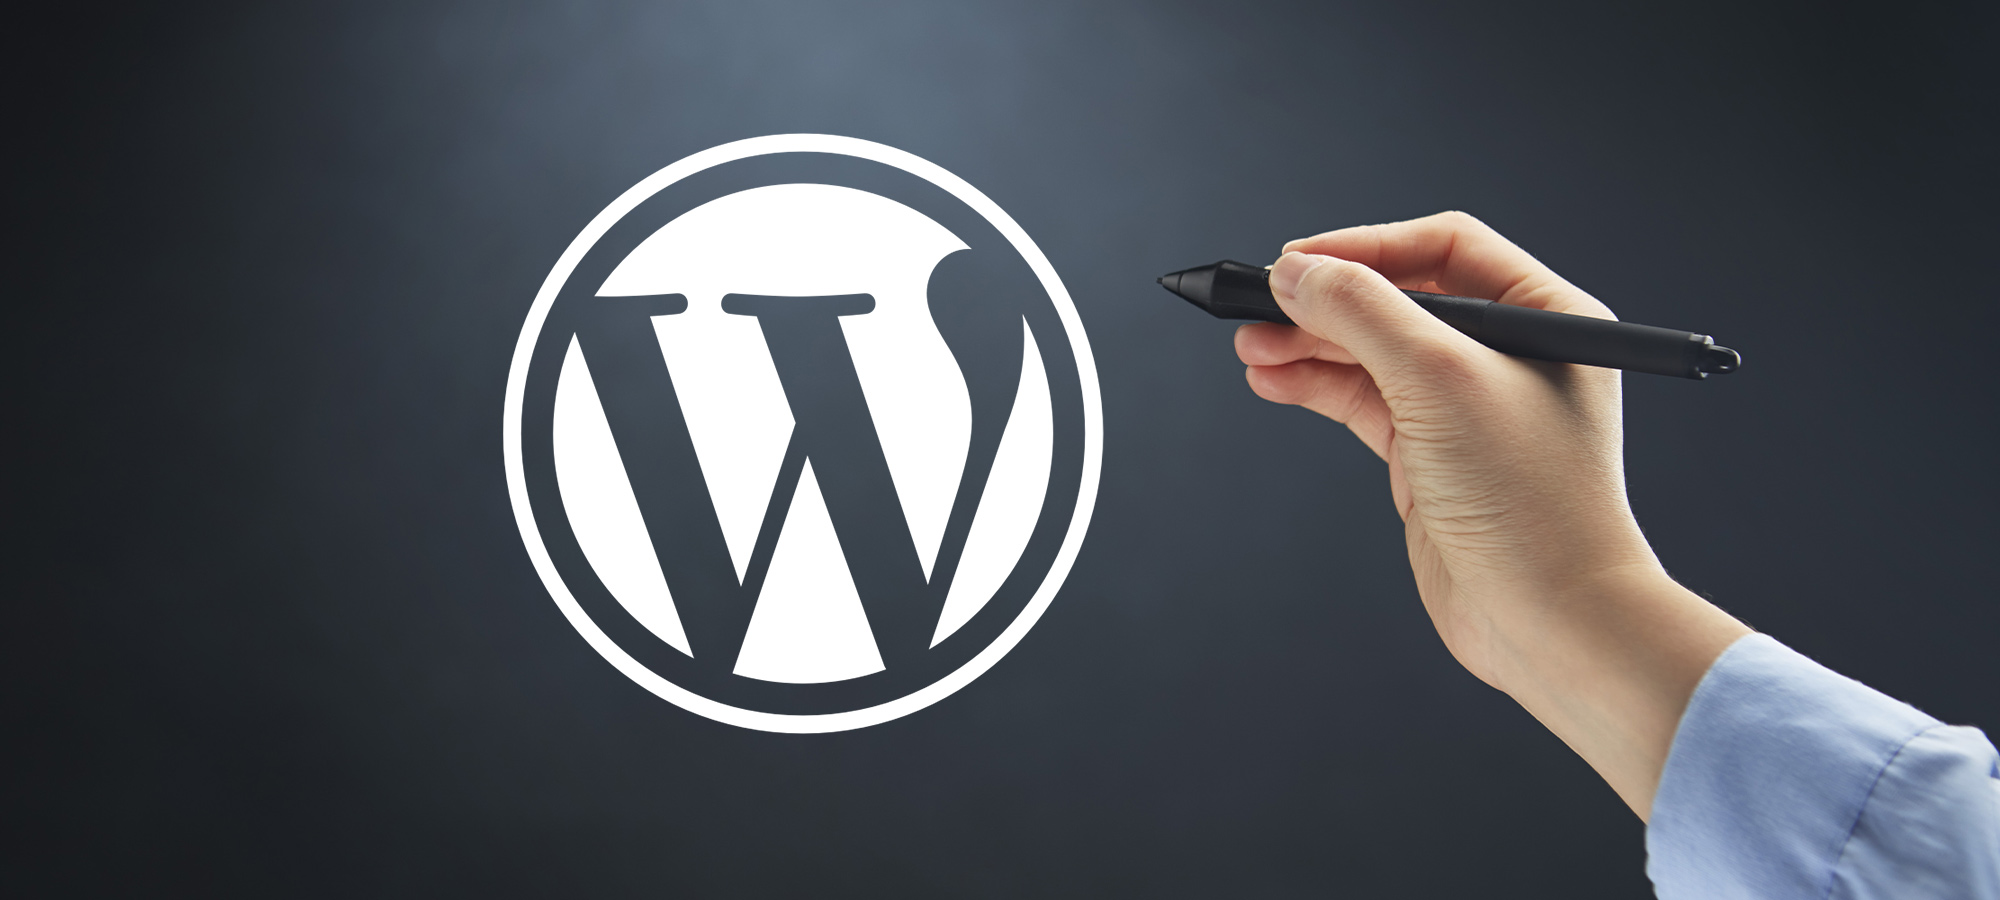 Logo WordPress avec une main qui tient un stylet